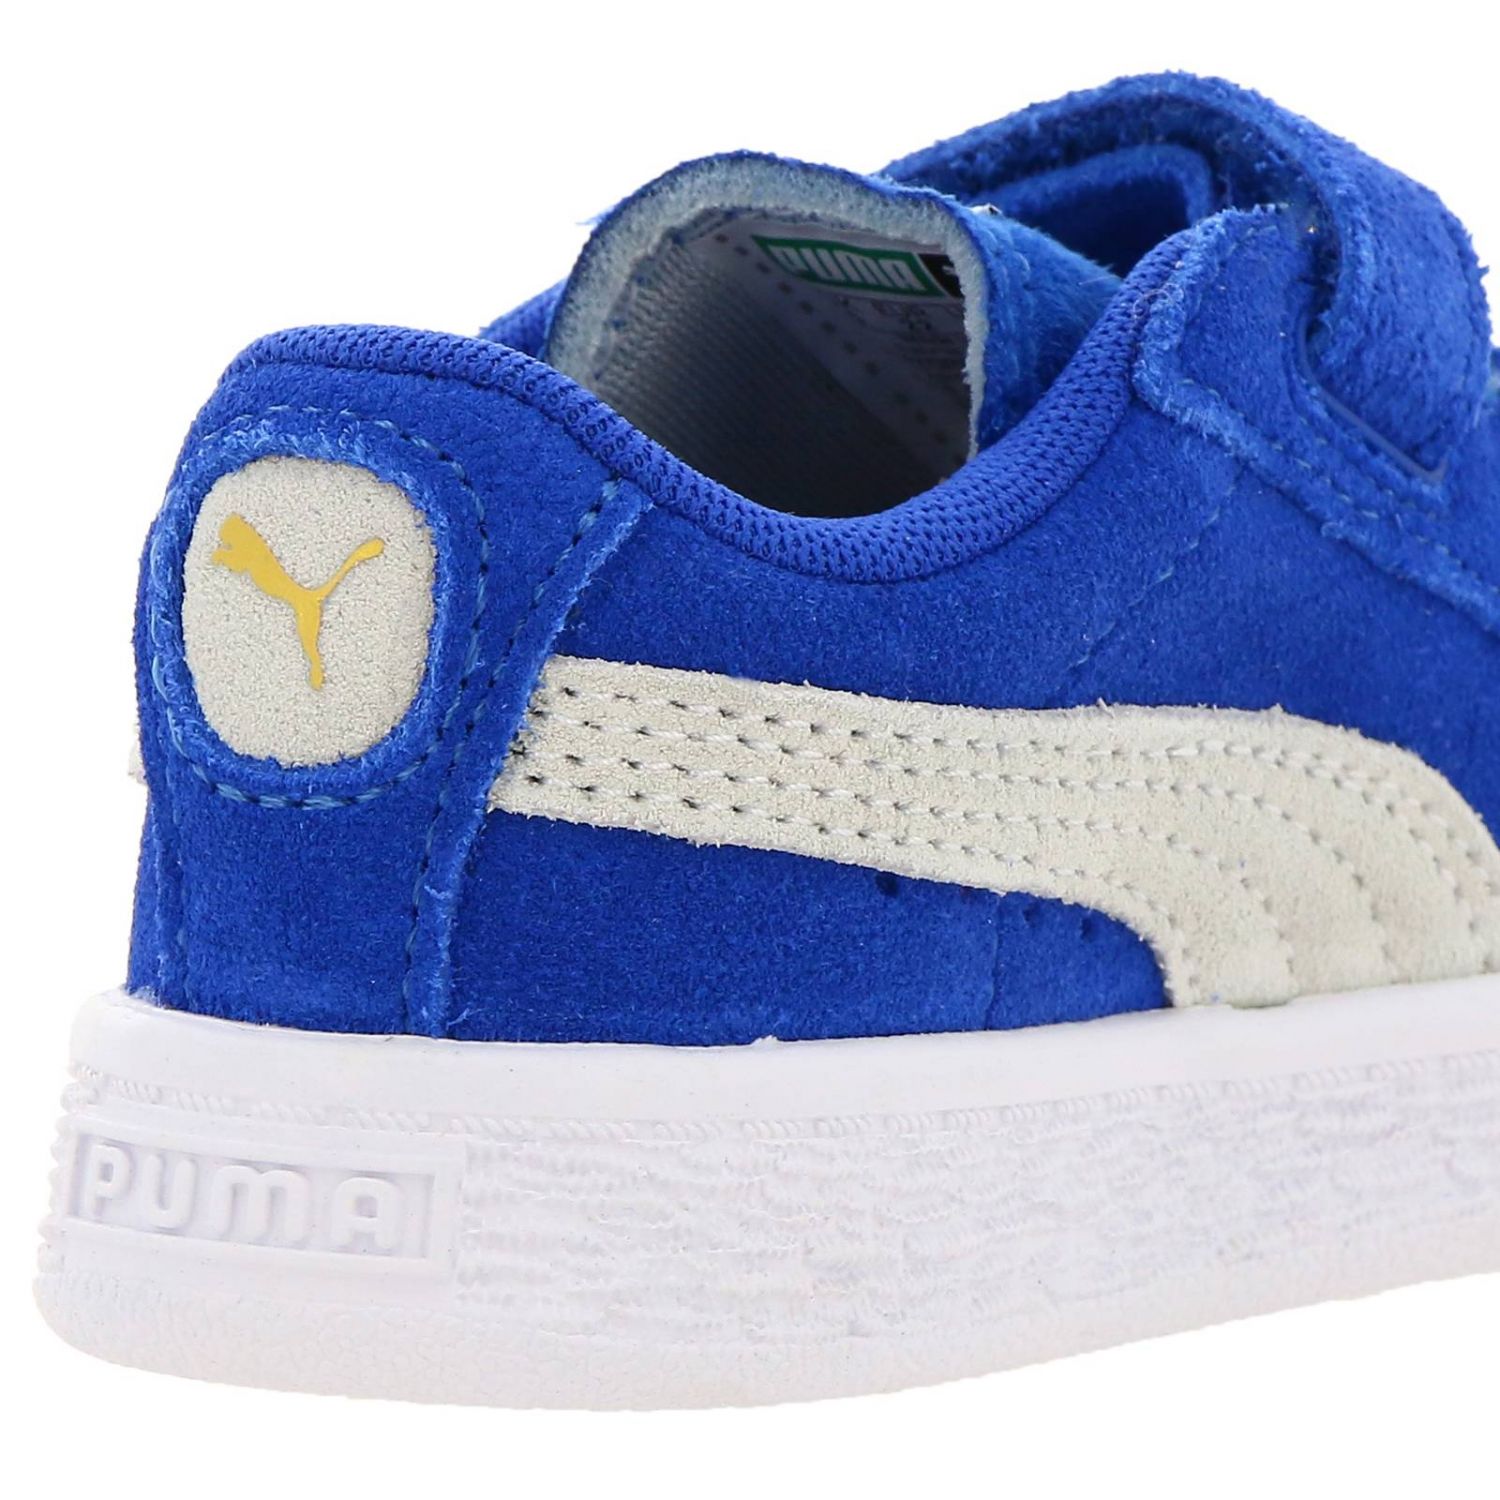 Shoes kids Puma | Shoes Puma Kids Royal Blue | Shoes Puma 356274 Giglio EN